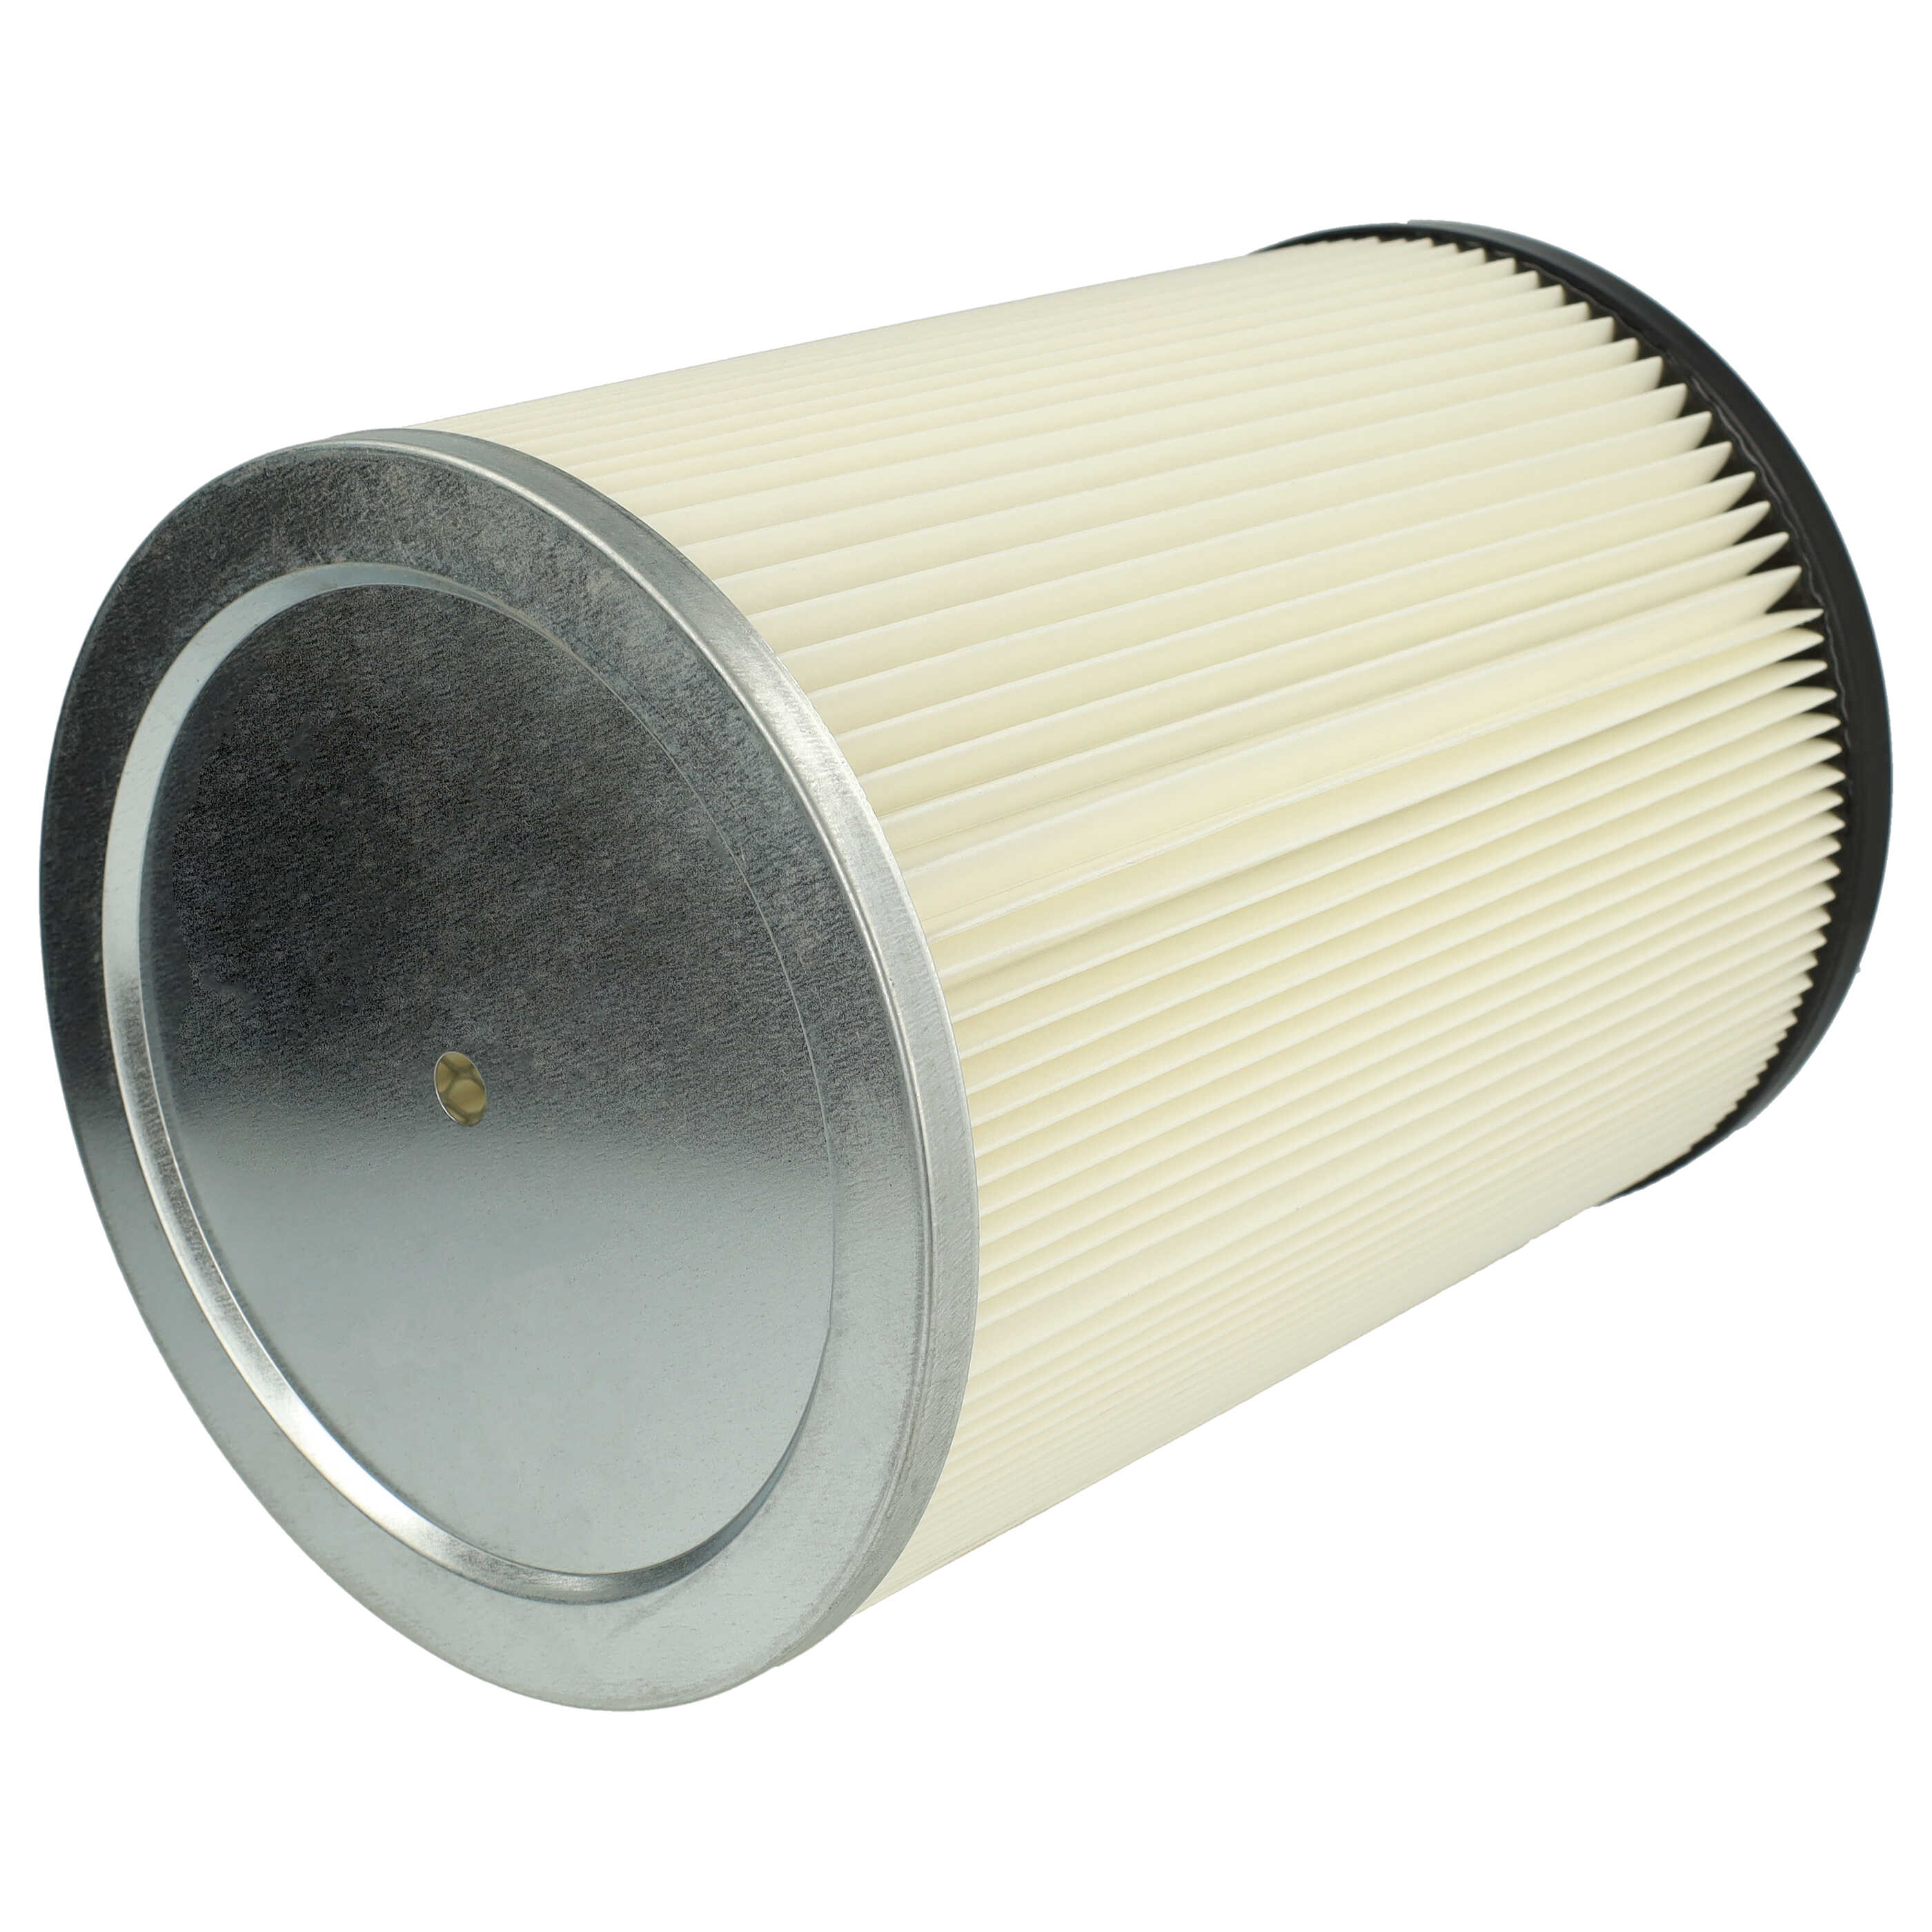 1x cartridge filter replaces Kärcher 6.904-325.0, 6.904-048.0 for KärcherVacuum Cleaner, white